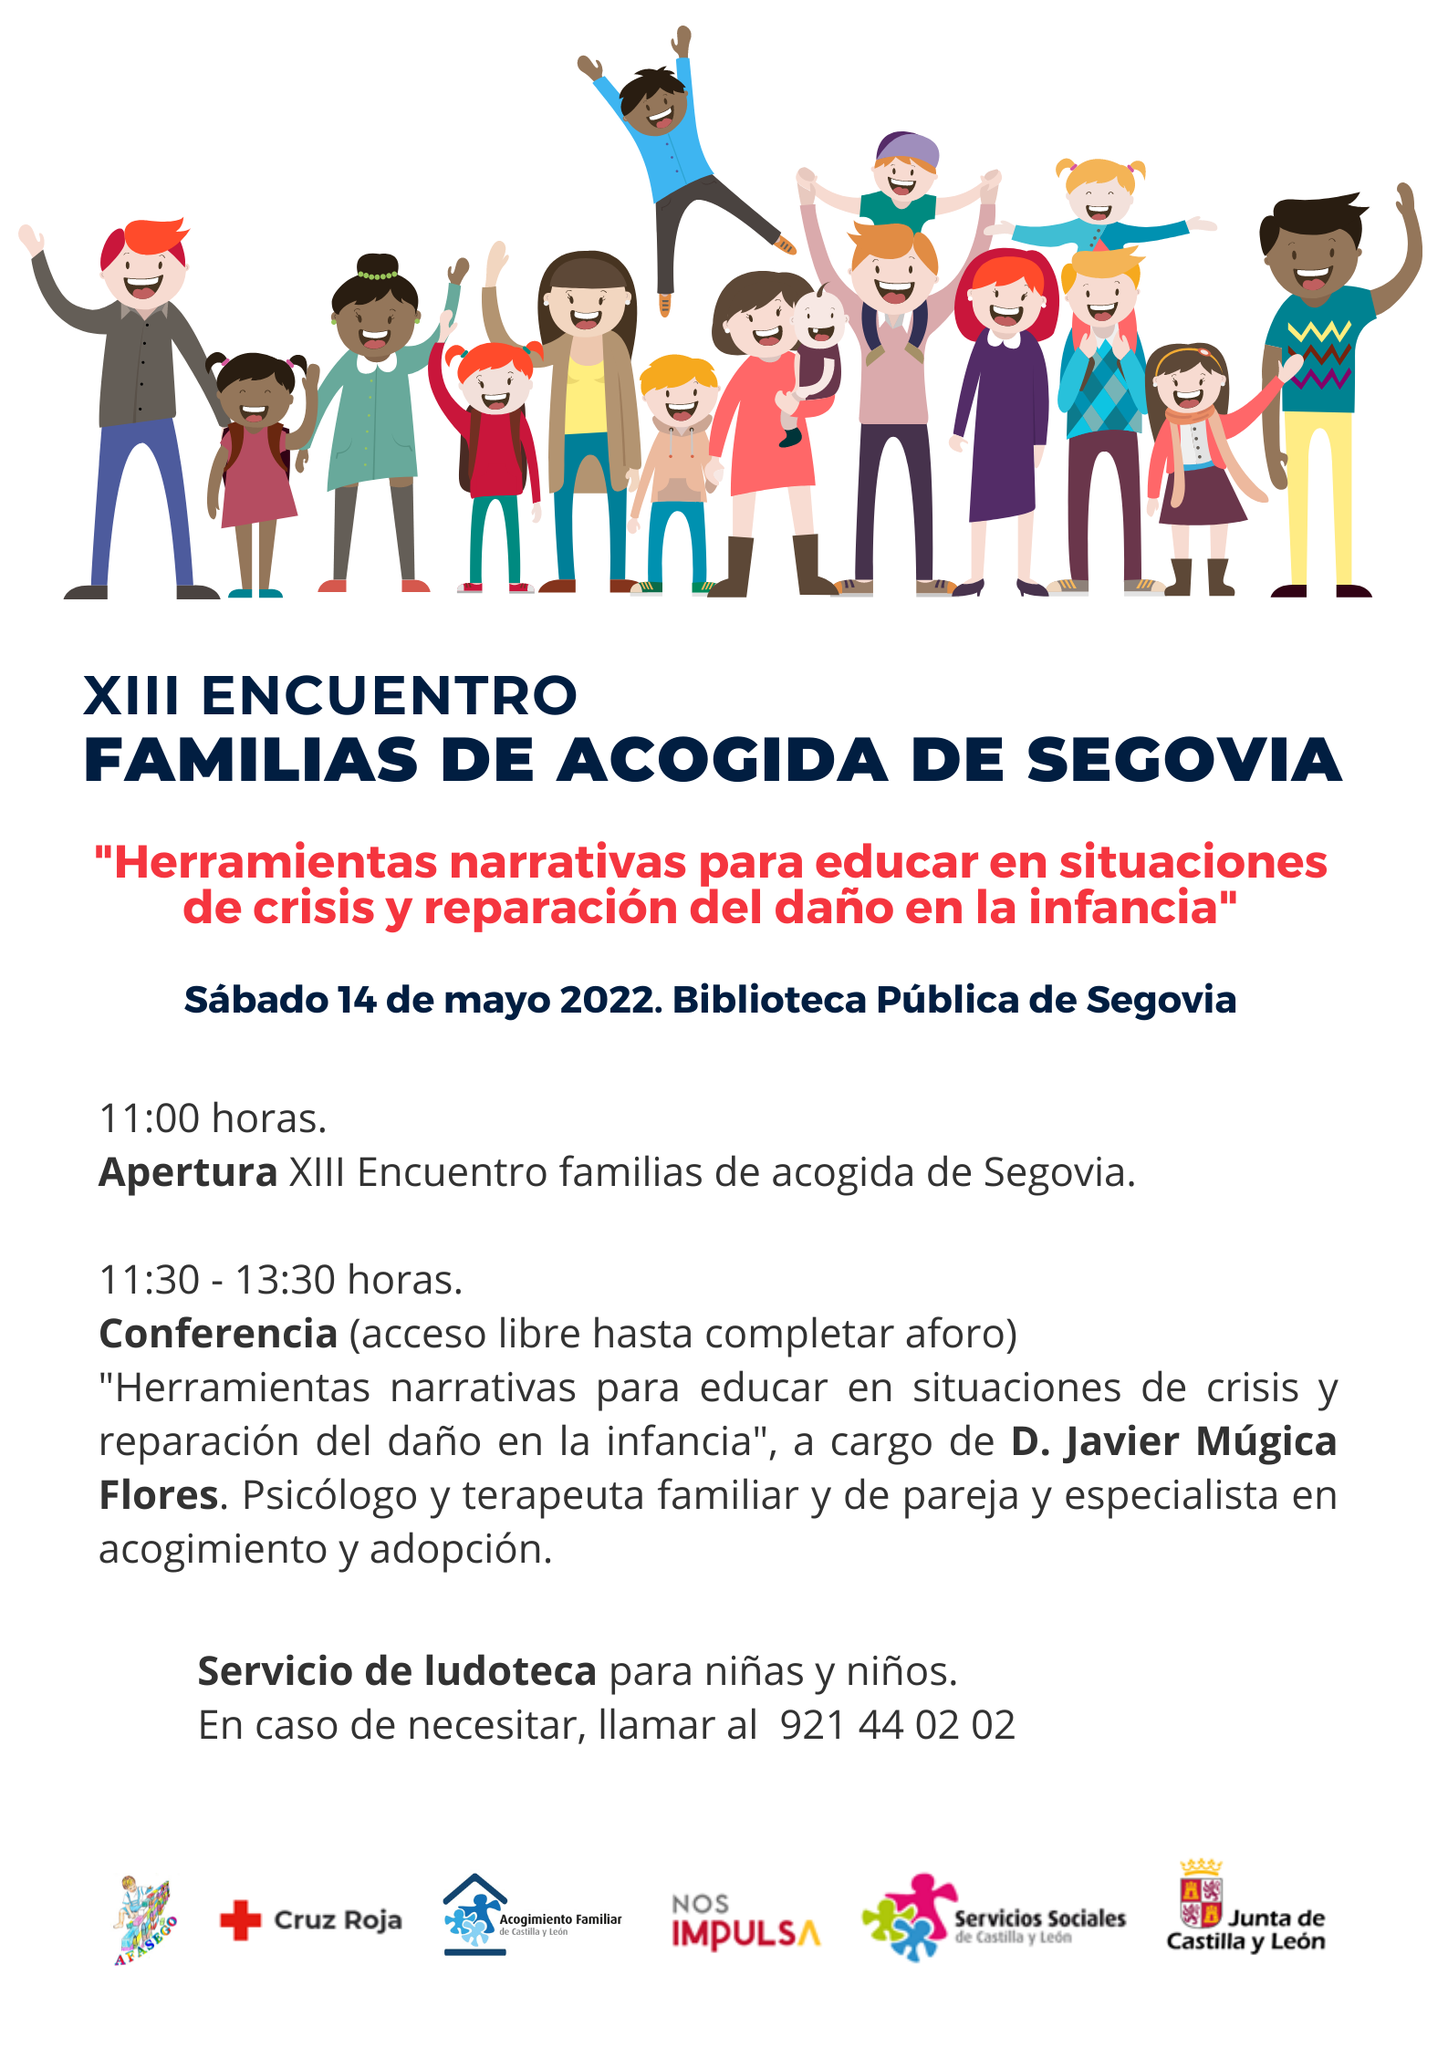 XIII Encuentro de Familias de Acogida de Segovia